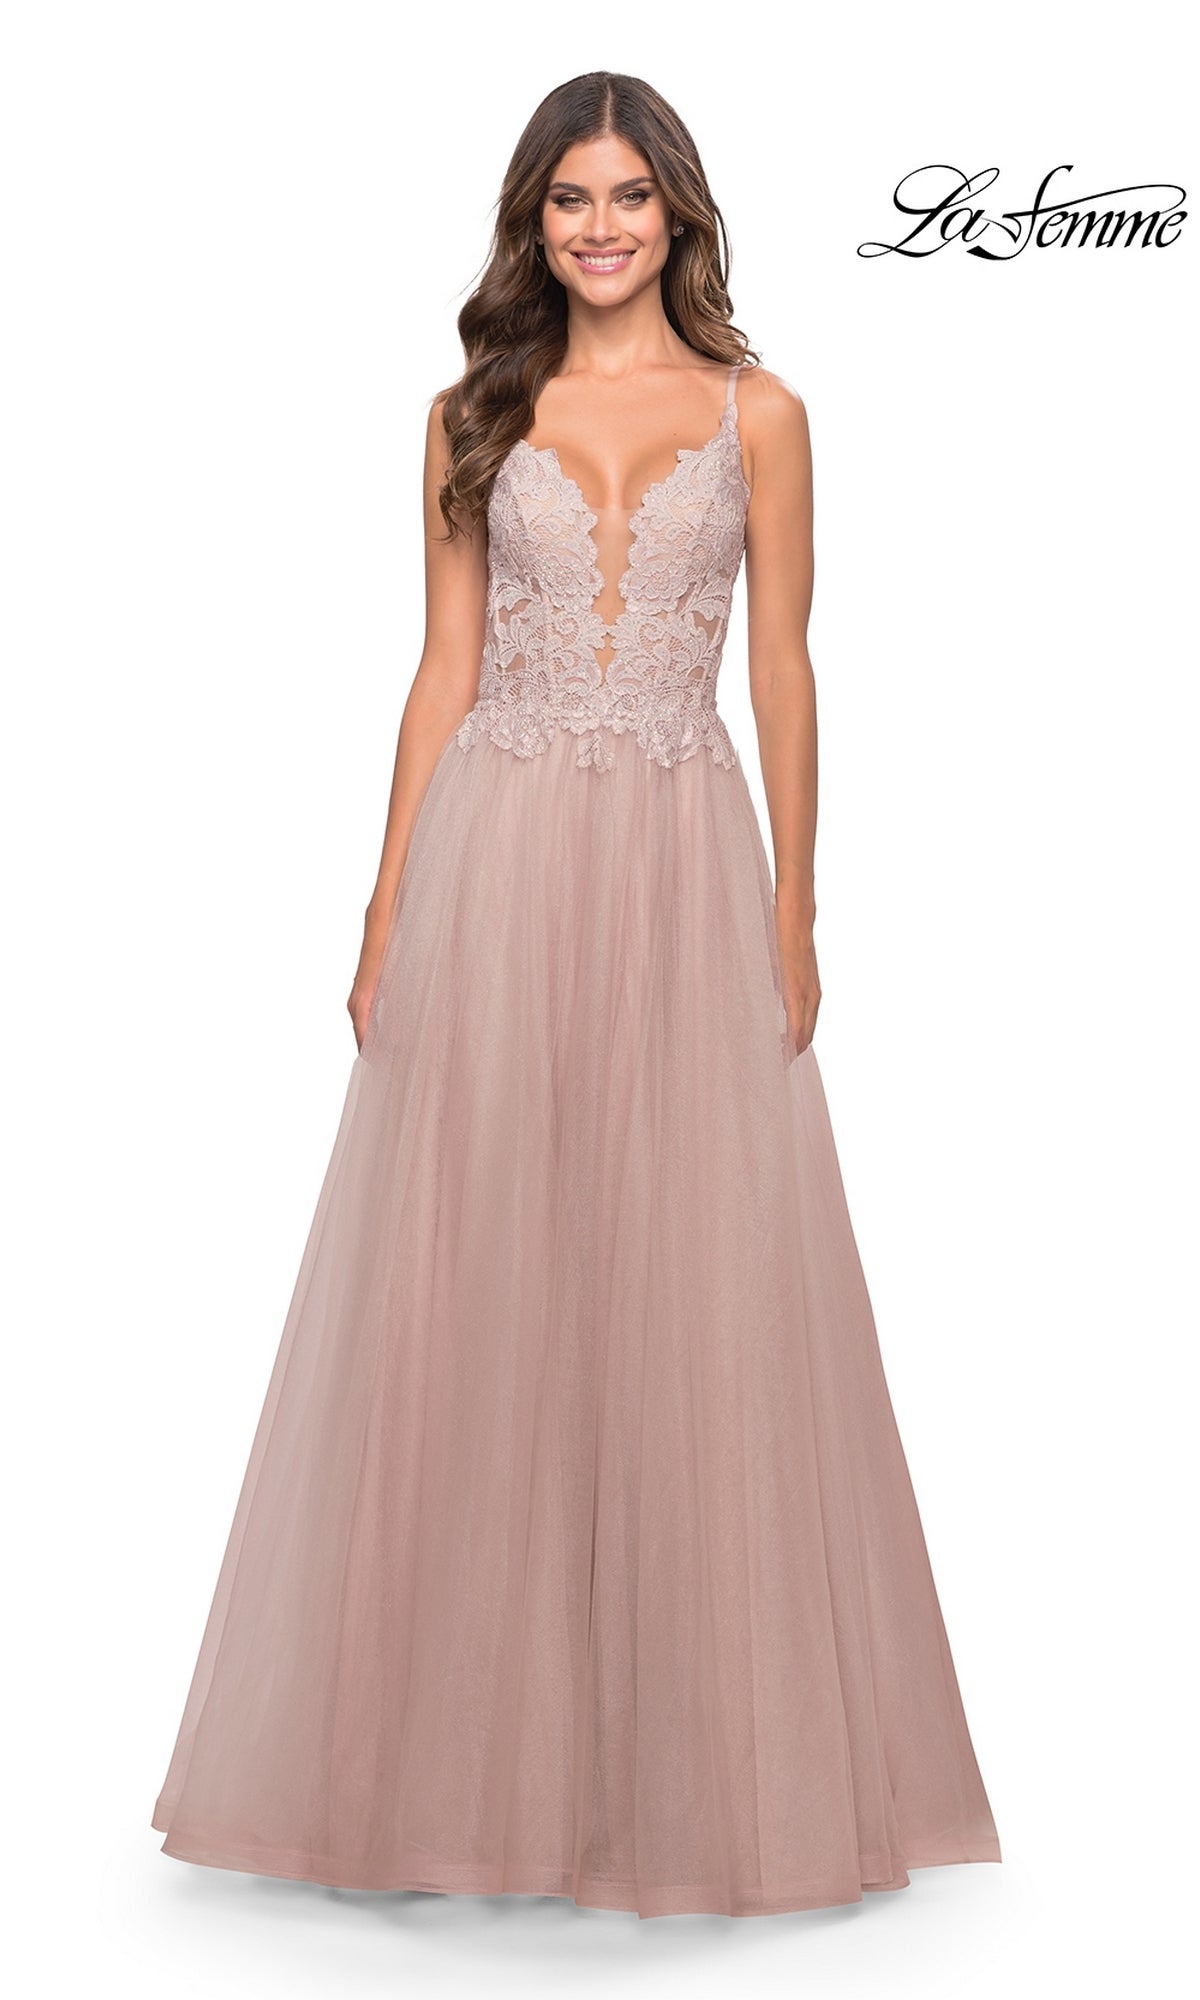  La Femme 31507 Formal Prom Dress